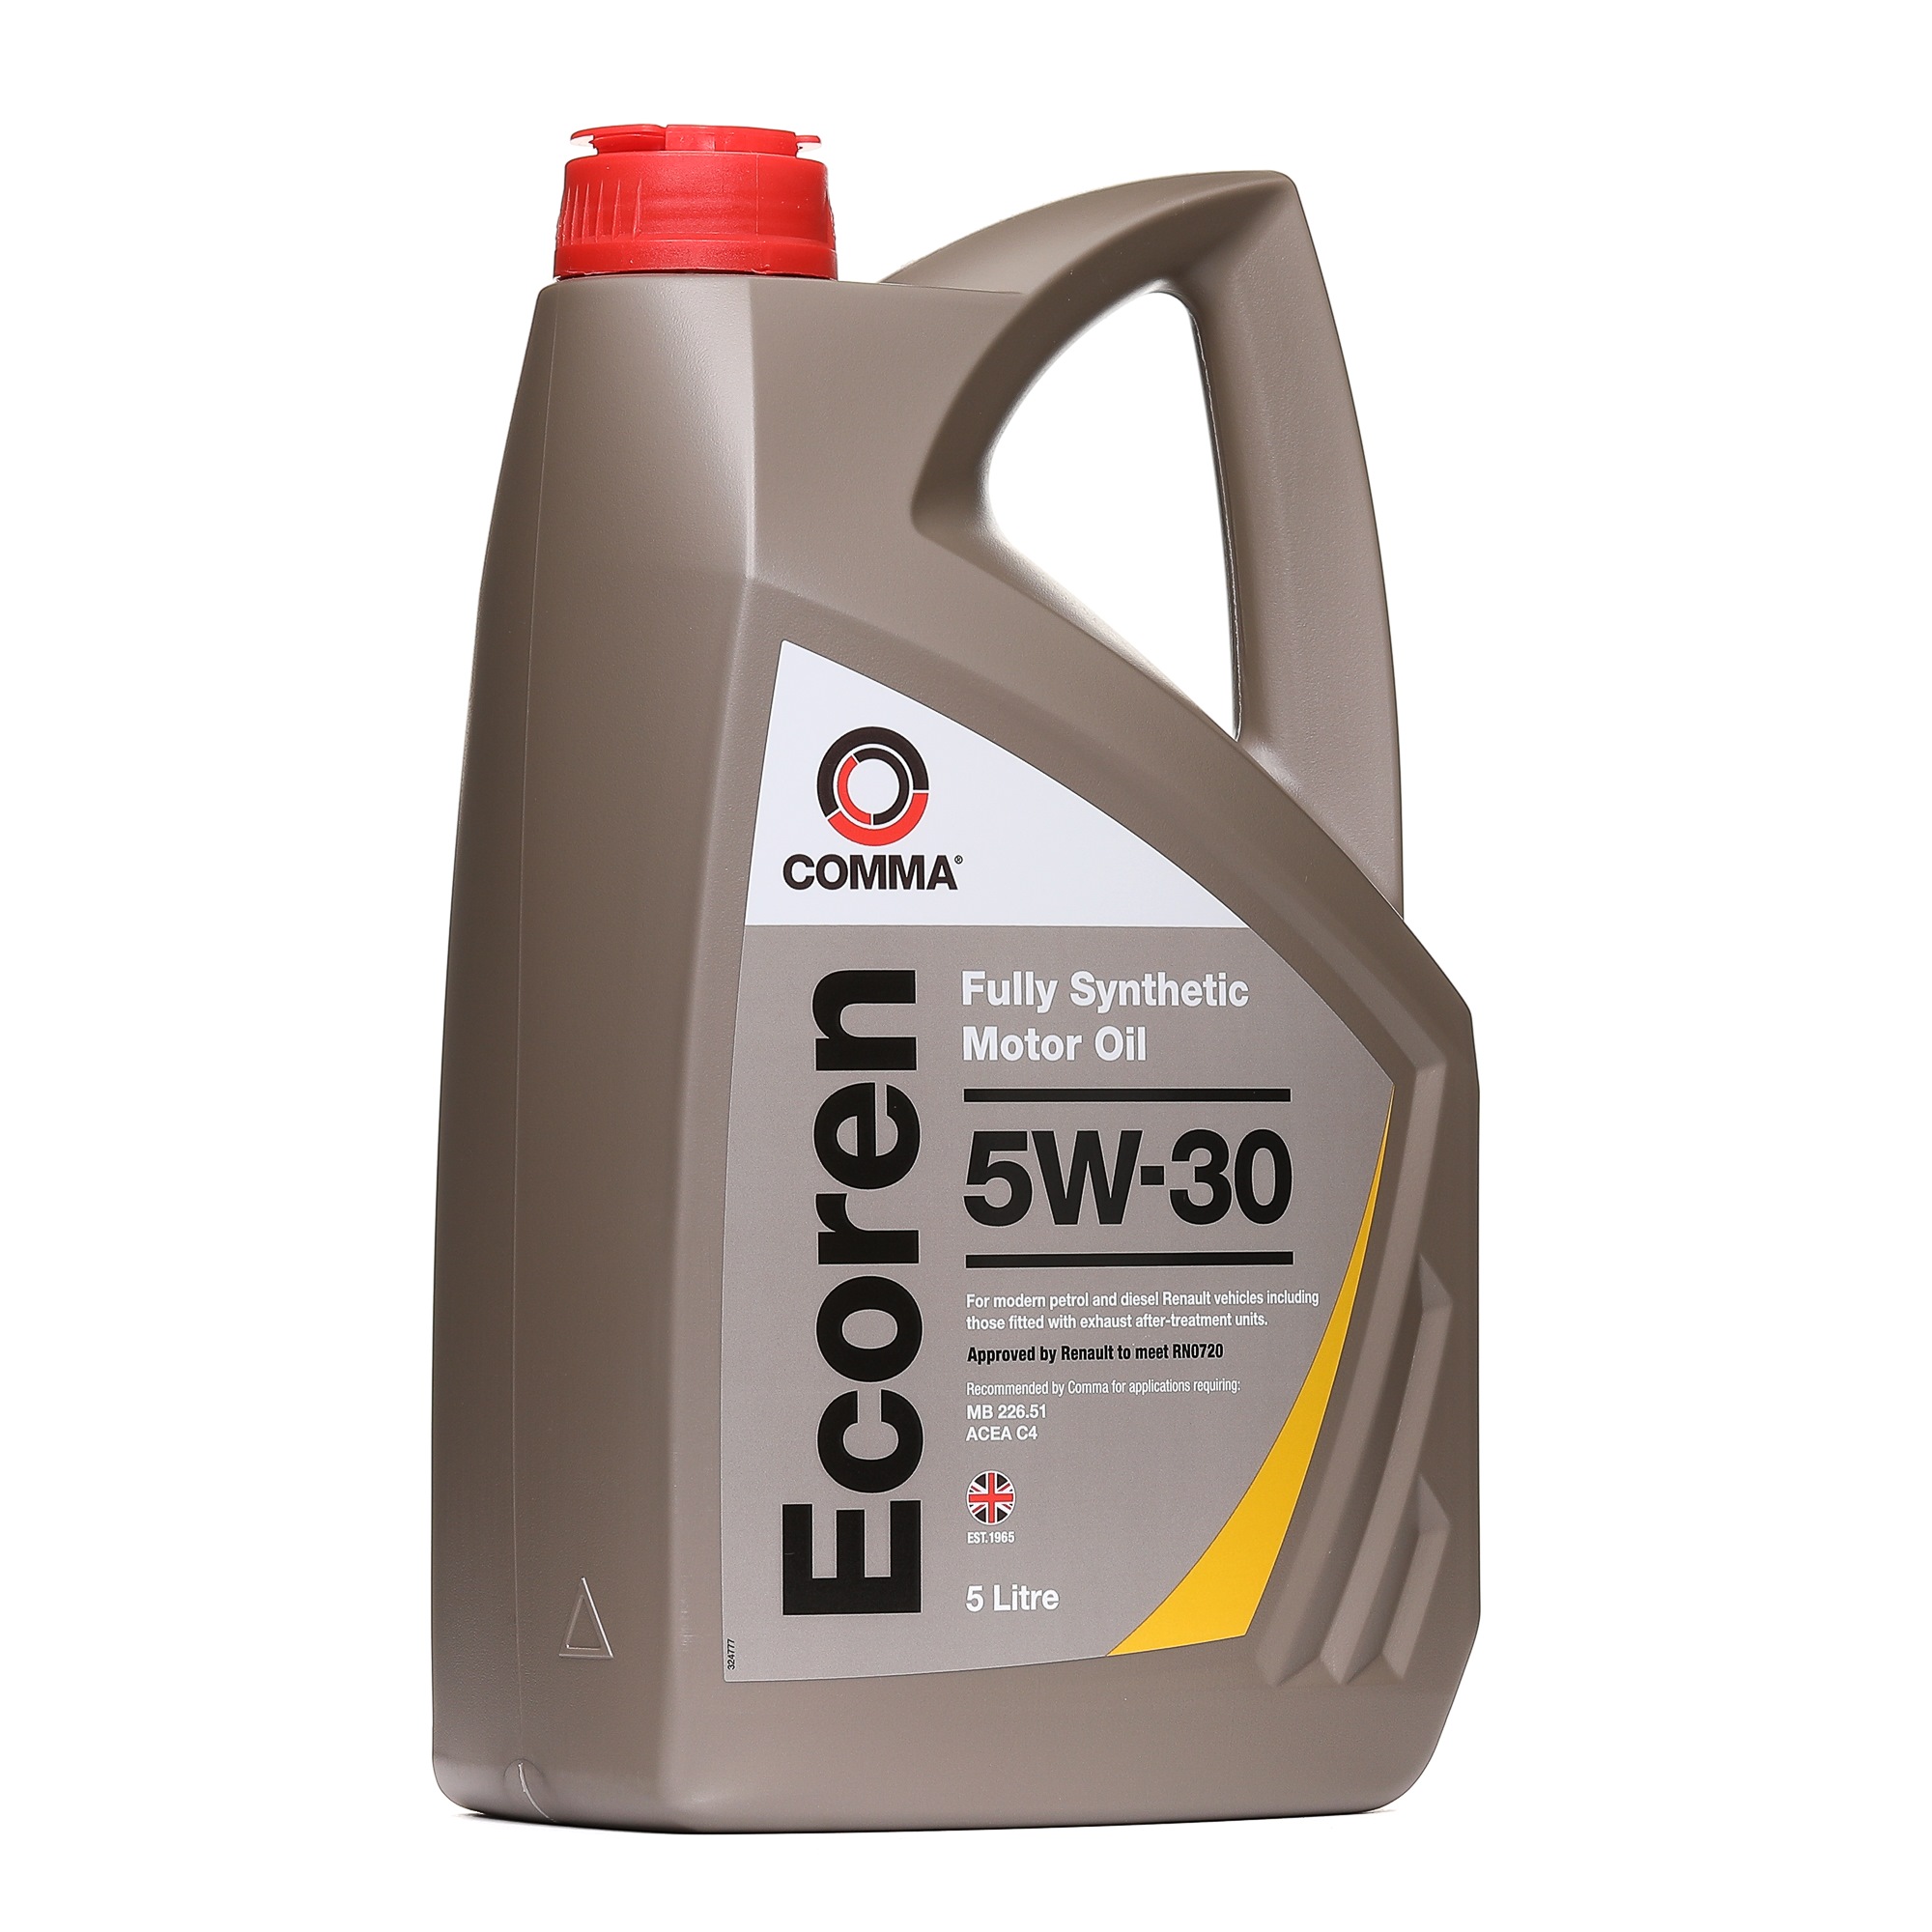 Kaufen Sie KFZ Motoröl COMMA ECR5L Ecoren 5W-30, 5l, Synthetiköl